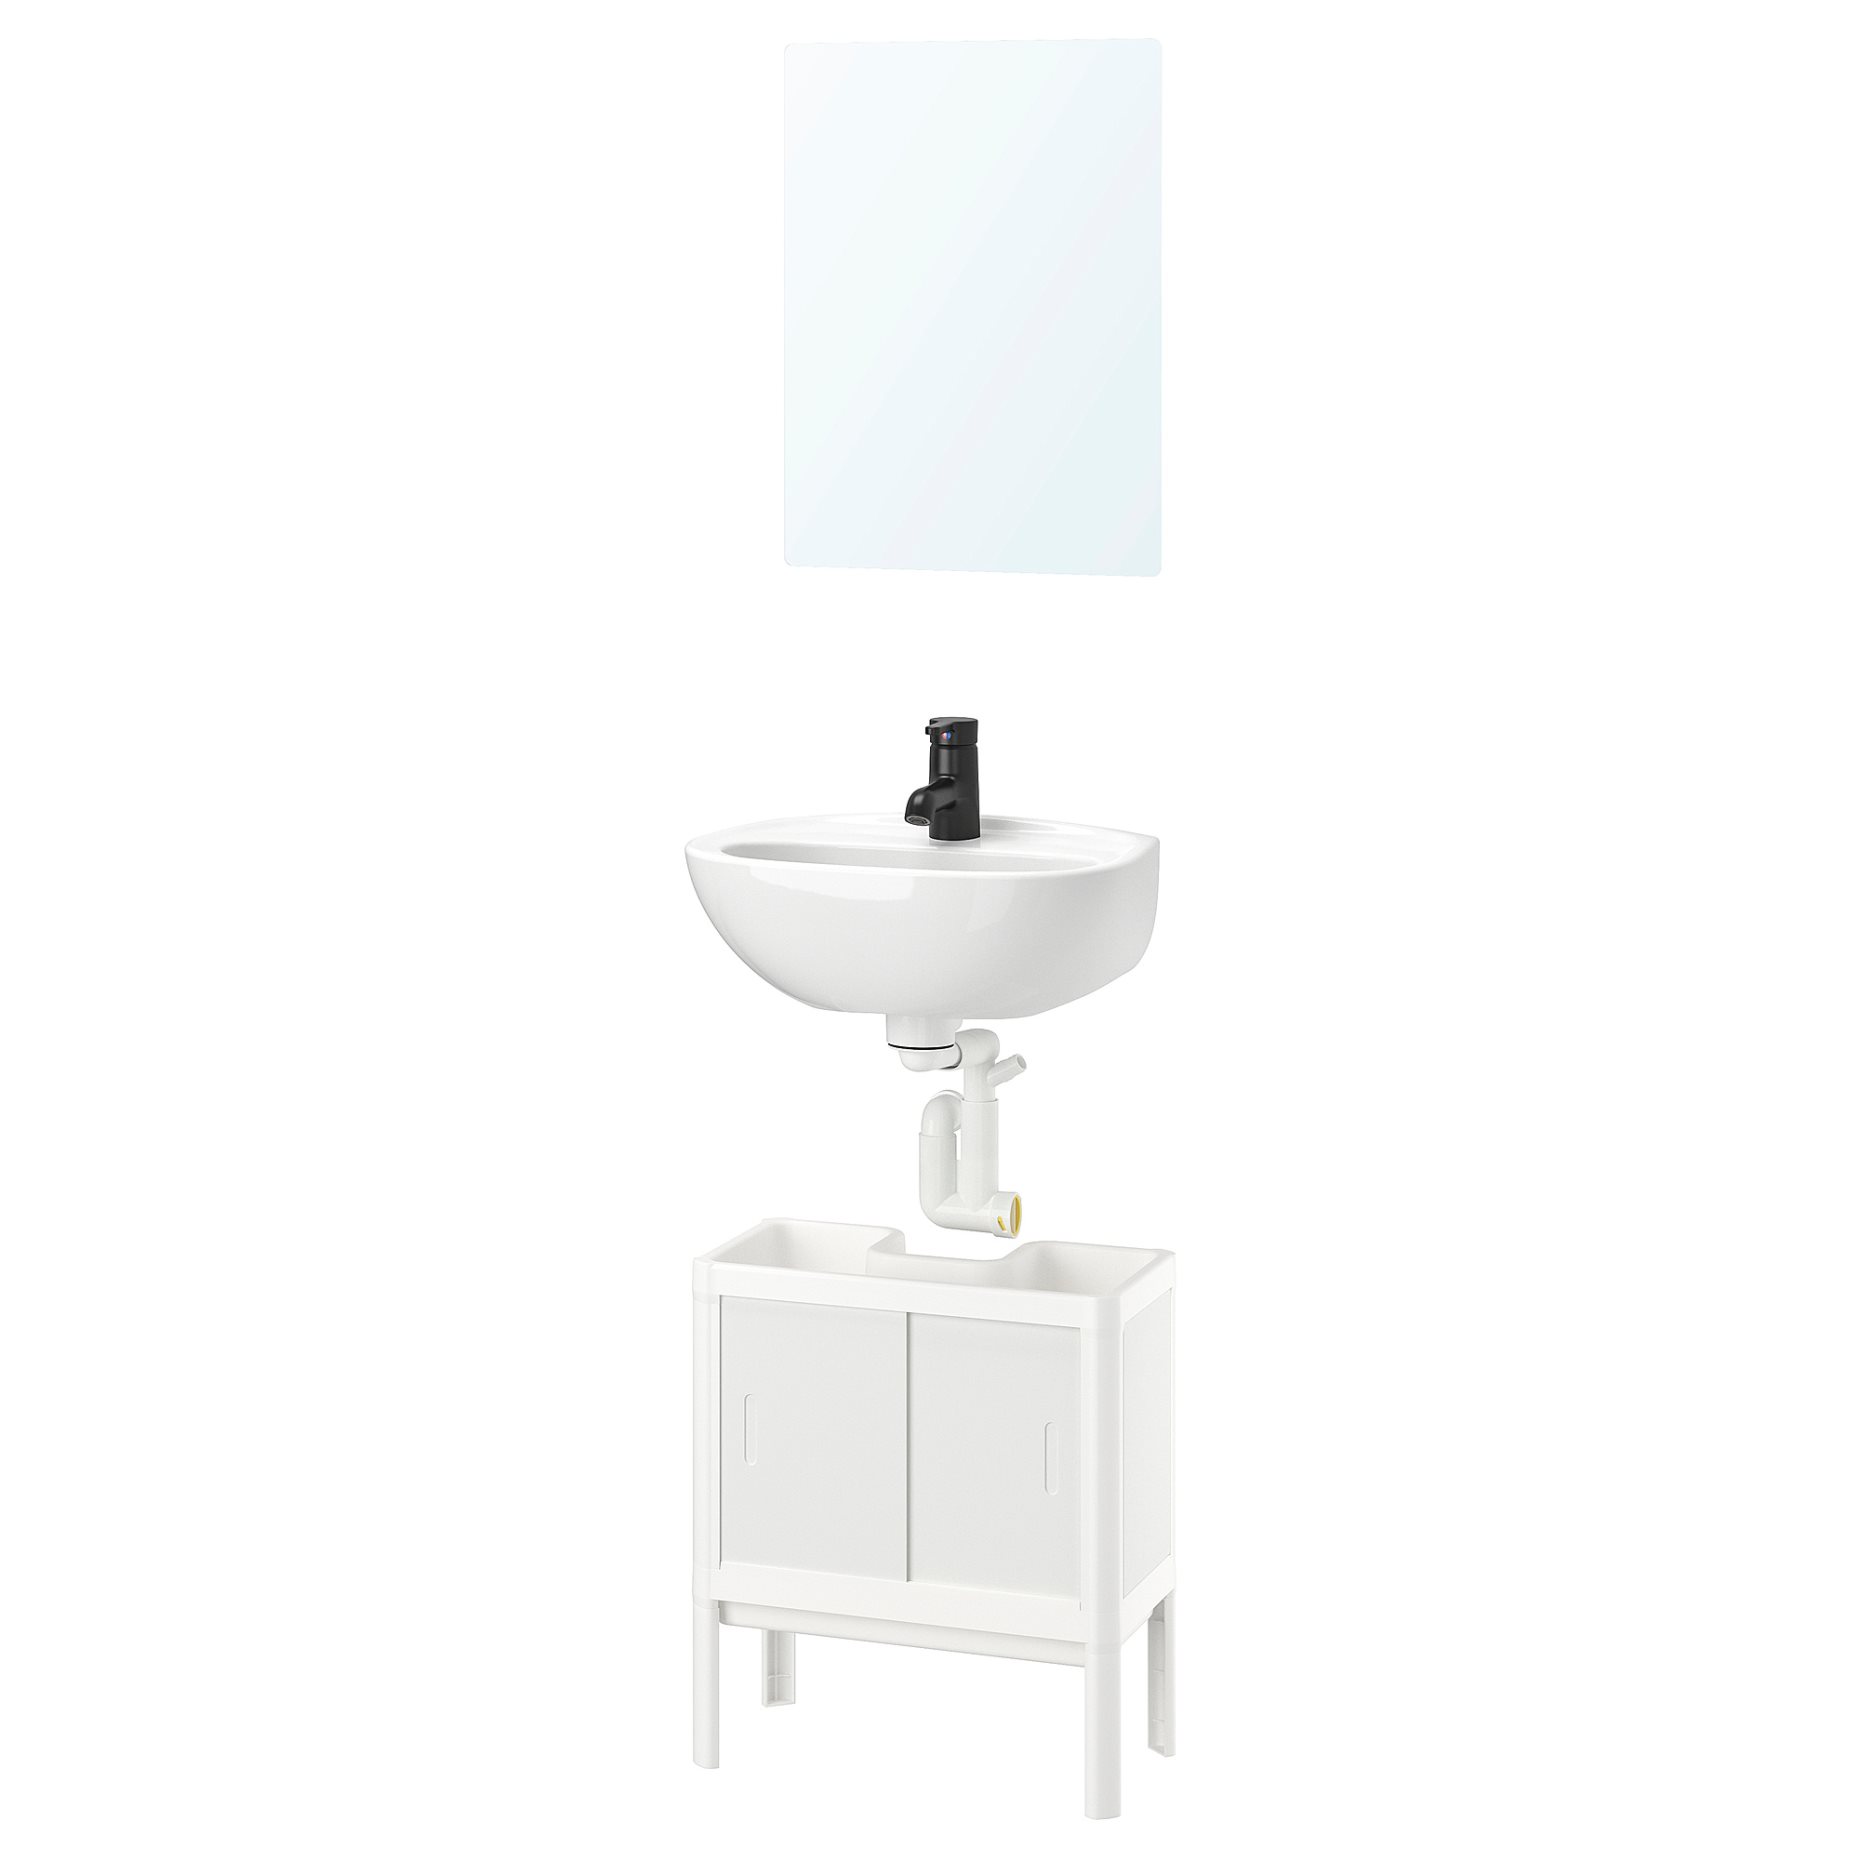 LILLTJARNSKATSJON, bathroom furniture/set of 5, 45x35 cm, 094.313.35